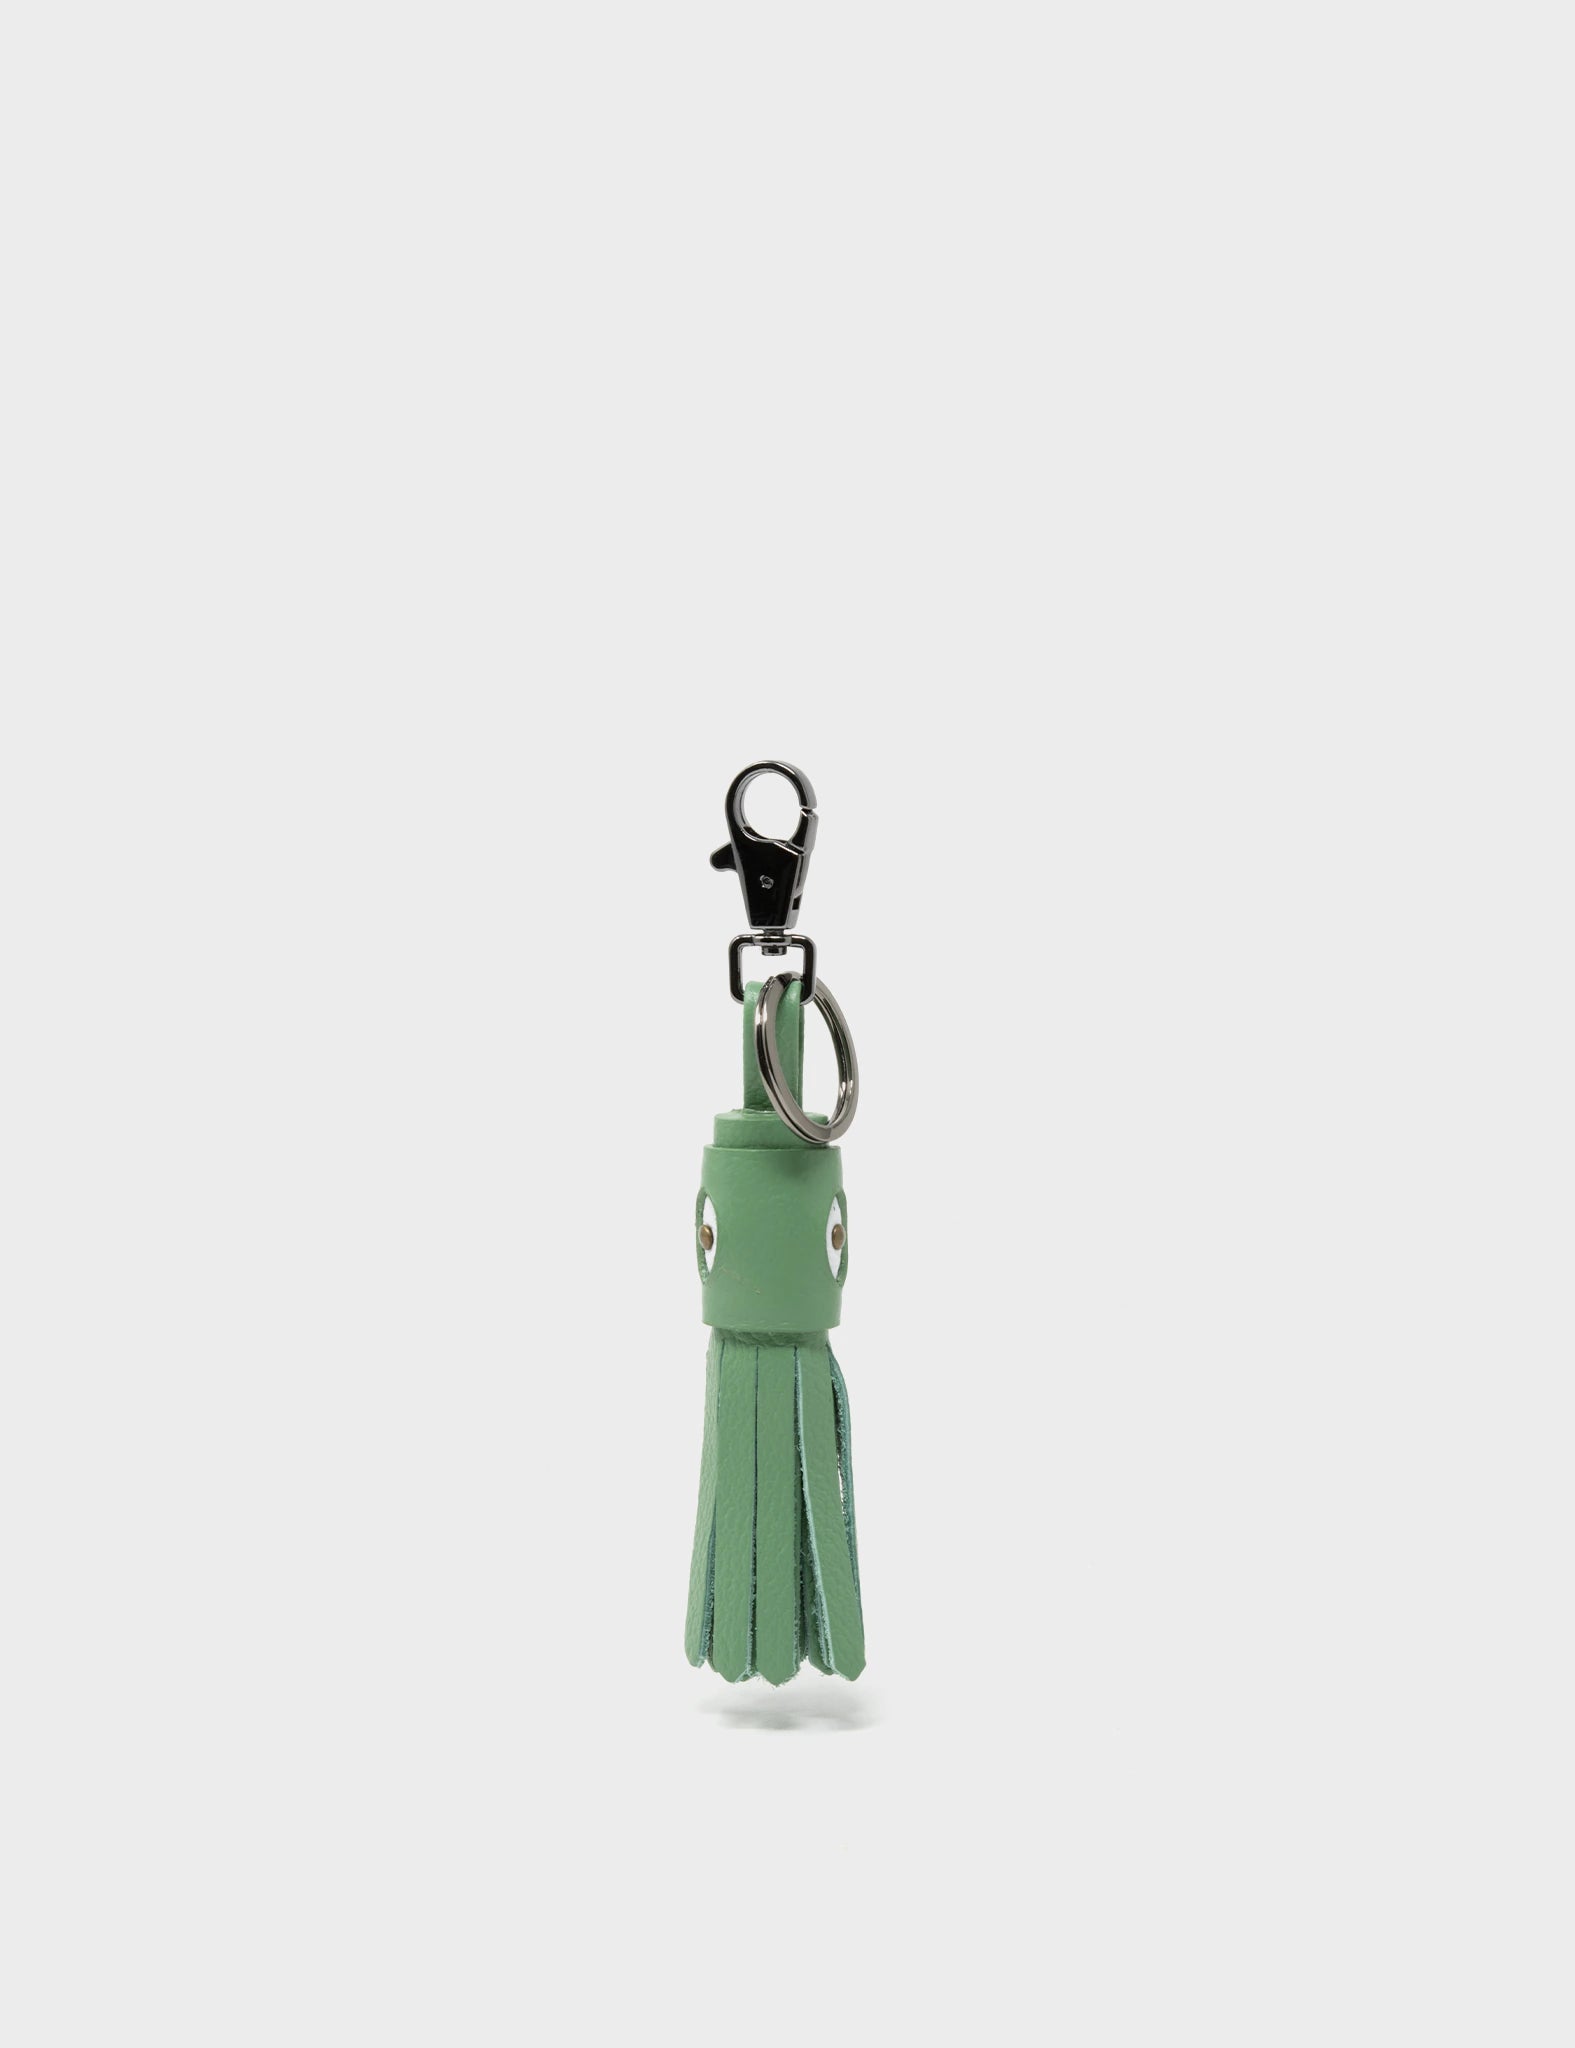 Squid Charm - Basil Green Leather KeychainSquid Charm - Basil Green Leather Keychain